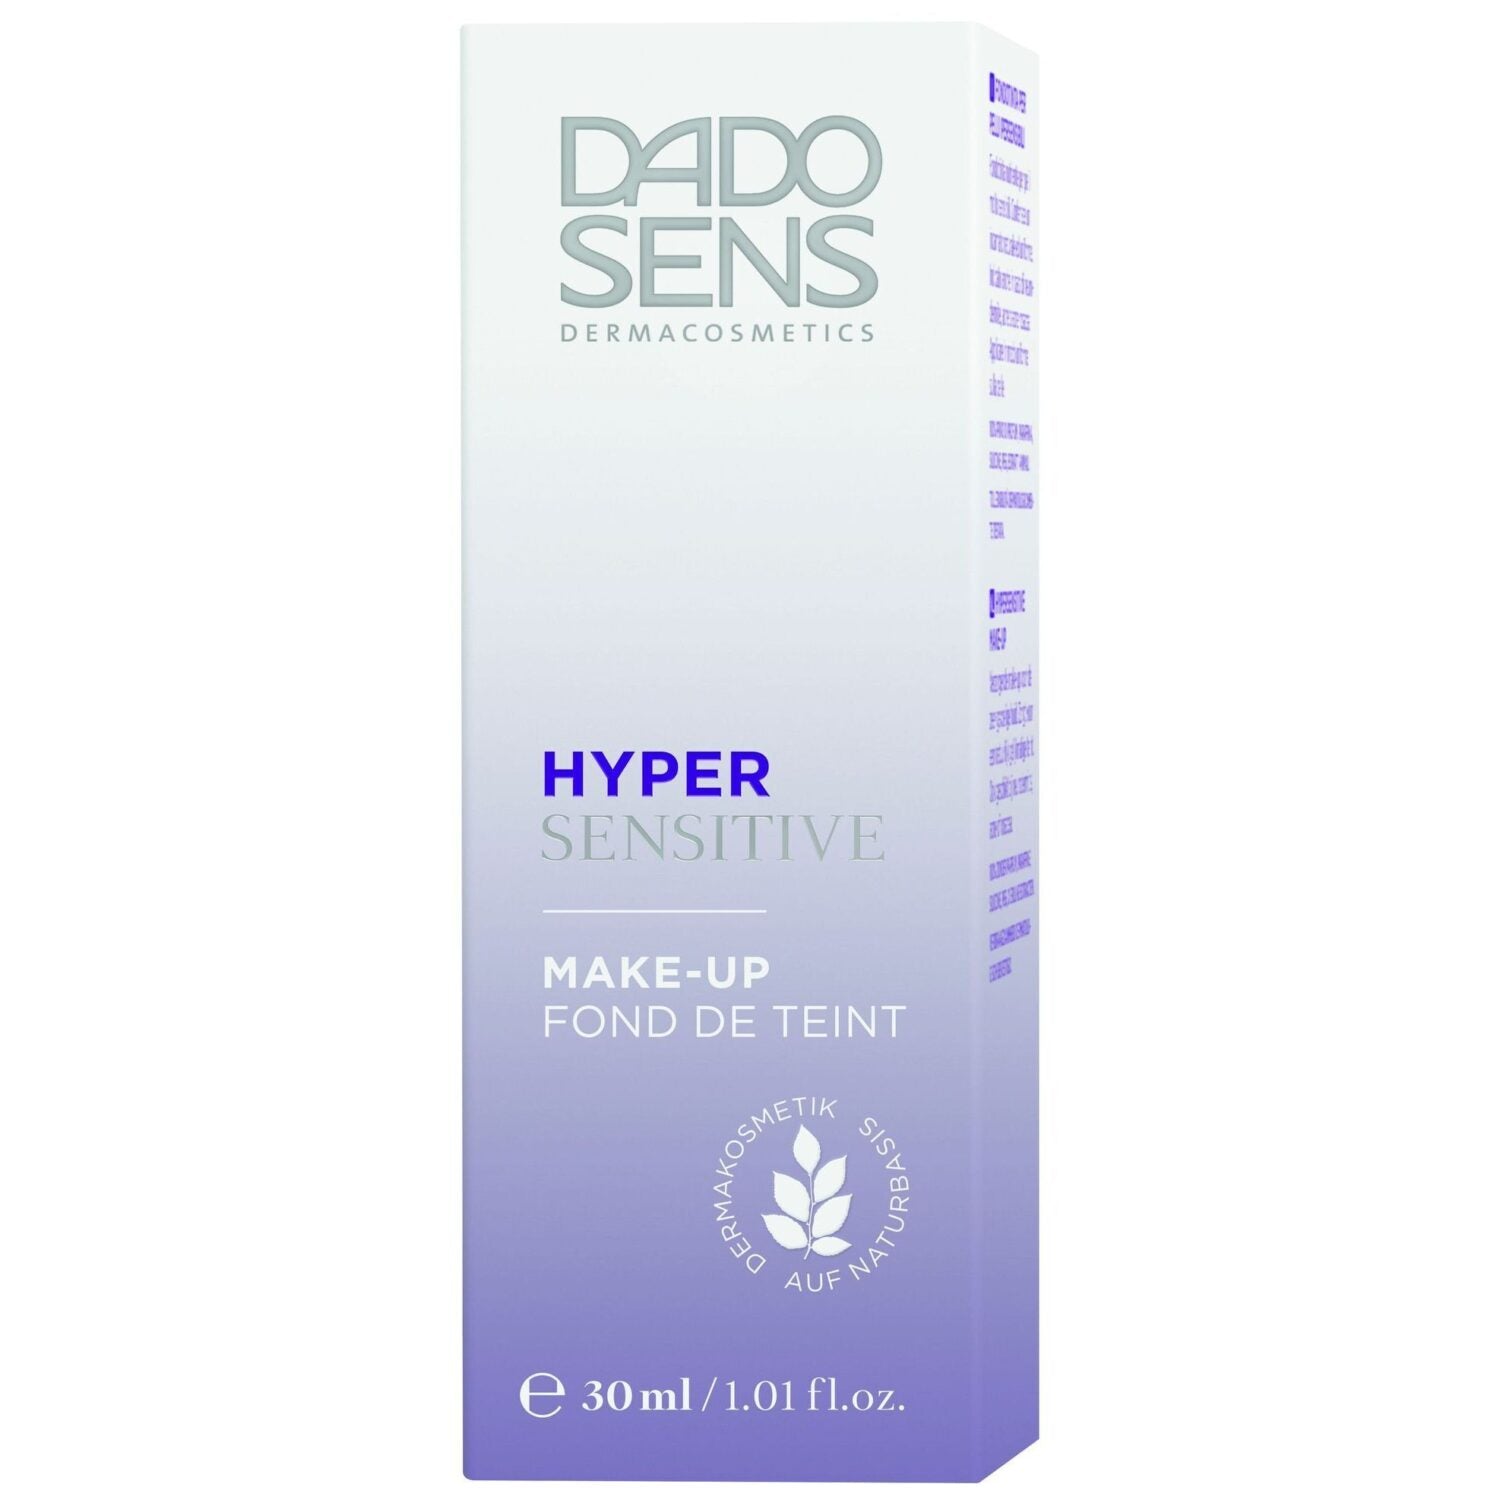 DADO SENS Hypersensitive Make-up